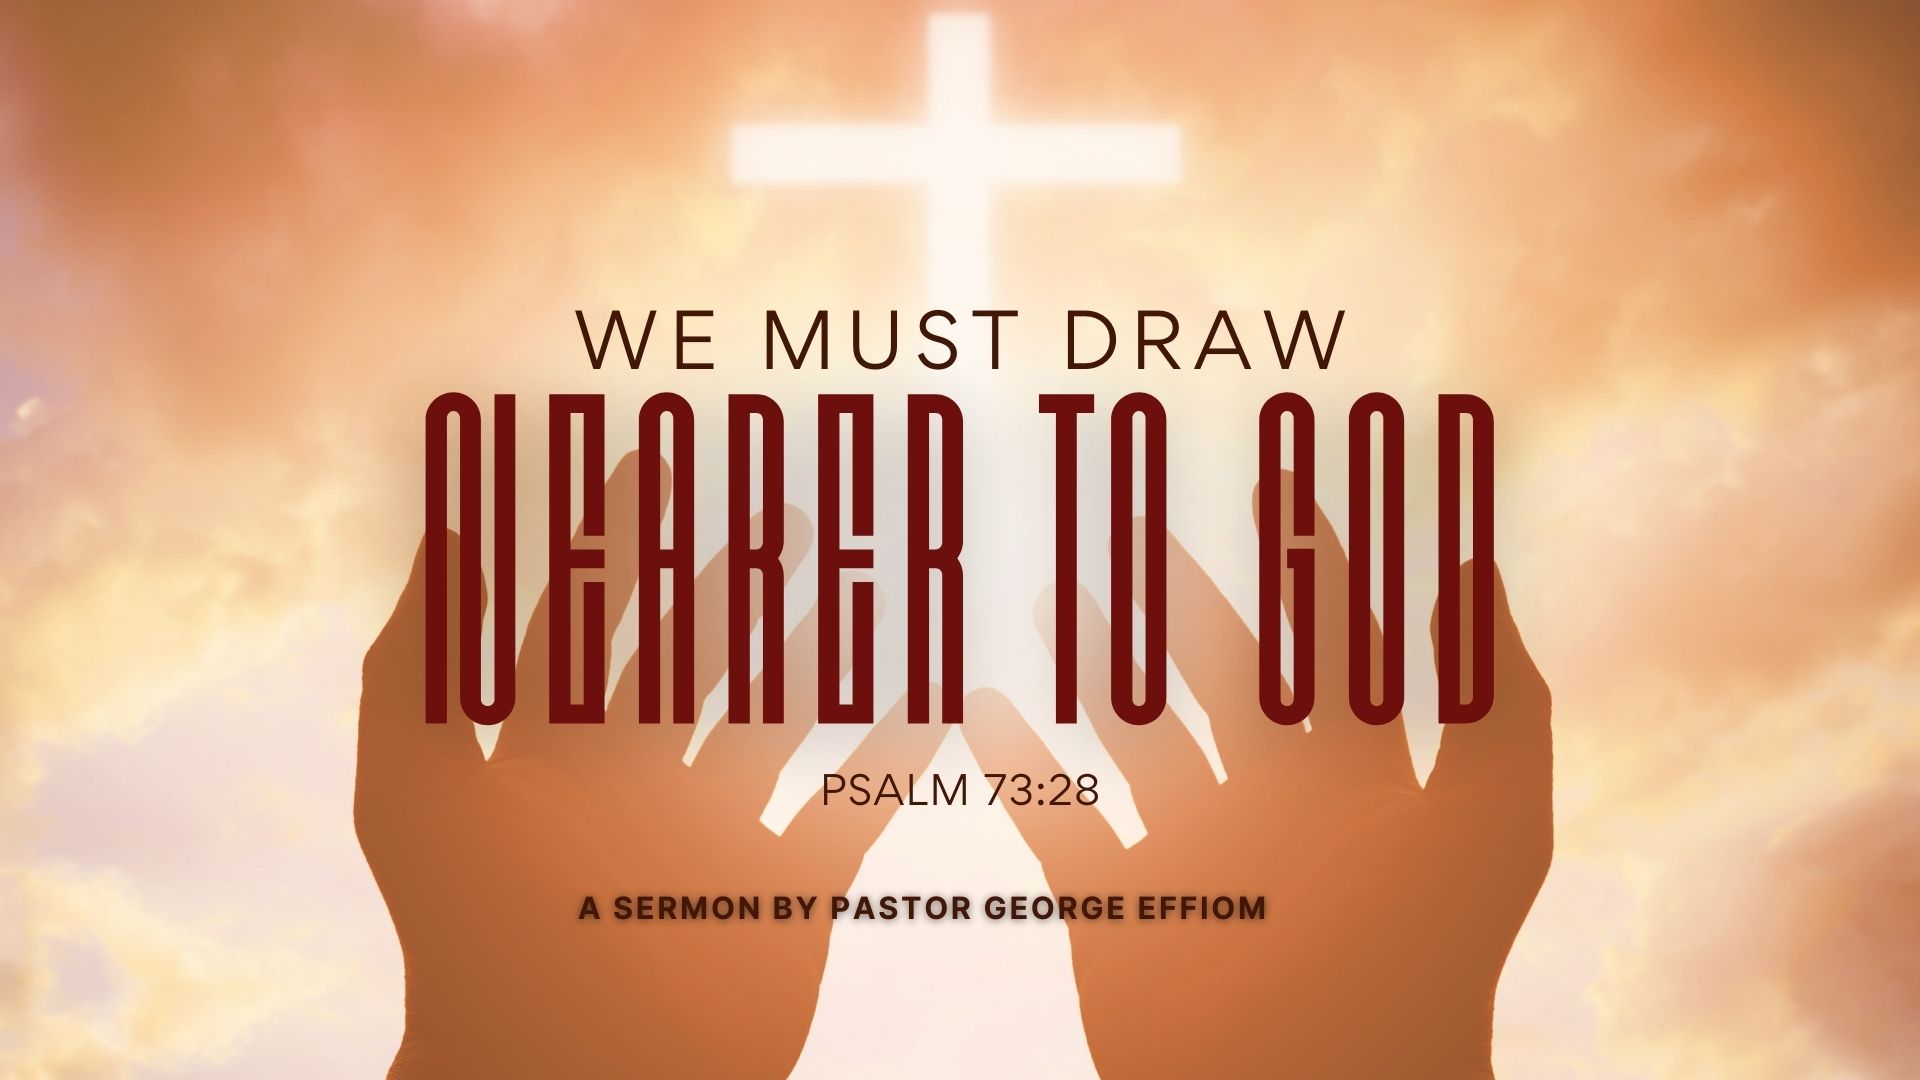 We Must Draw Nearer to God